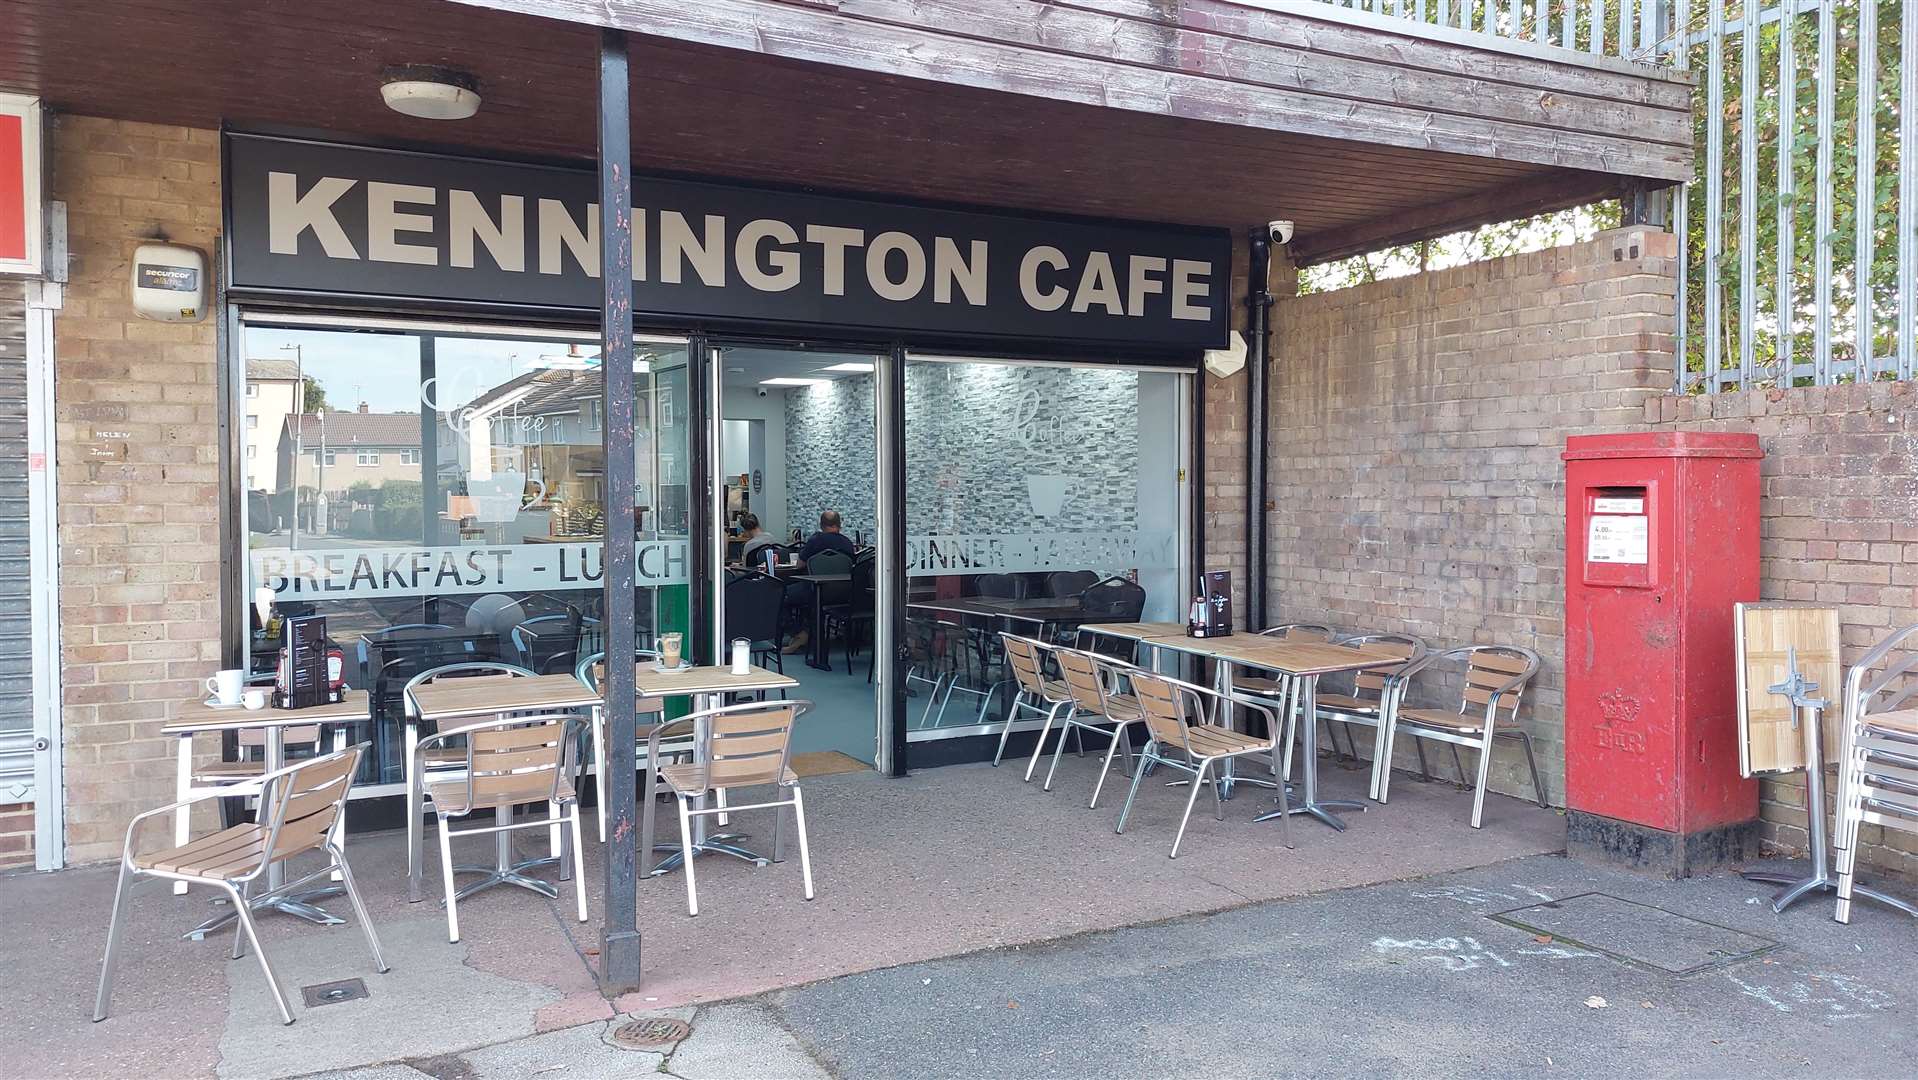 Kennington Cafe is now open